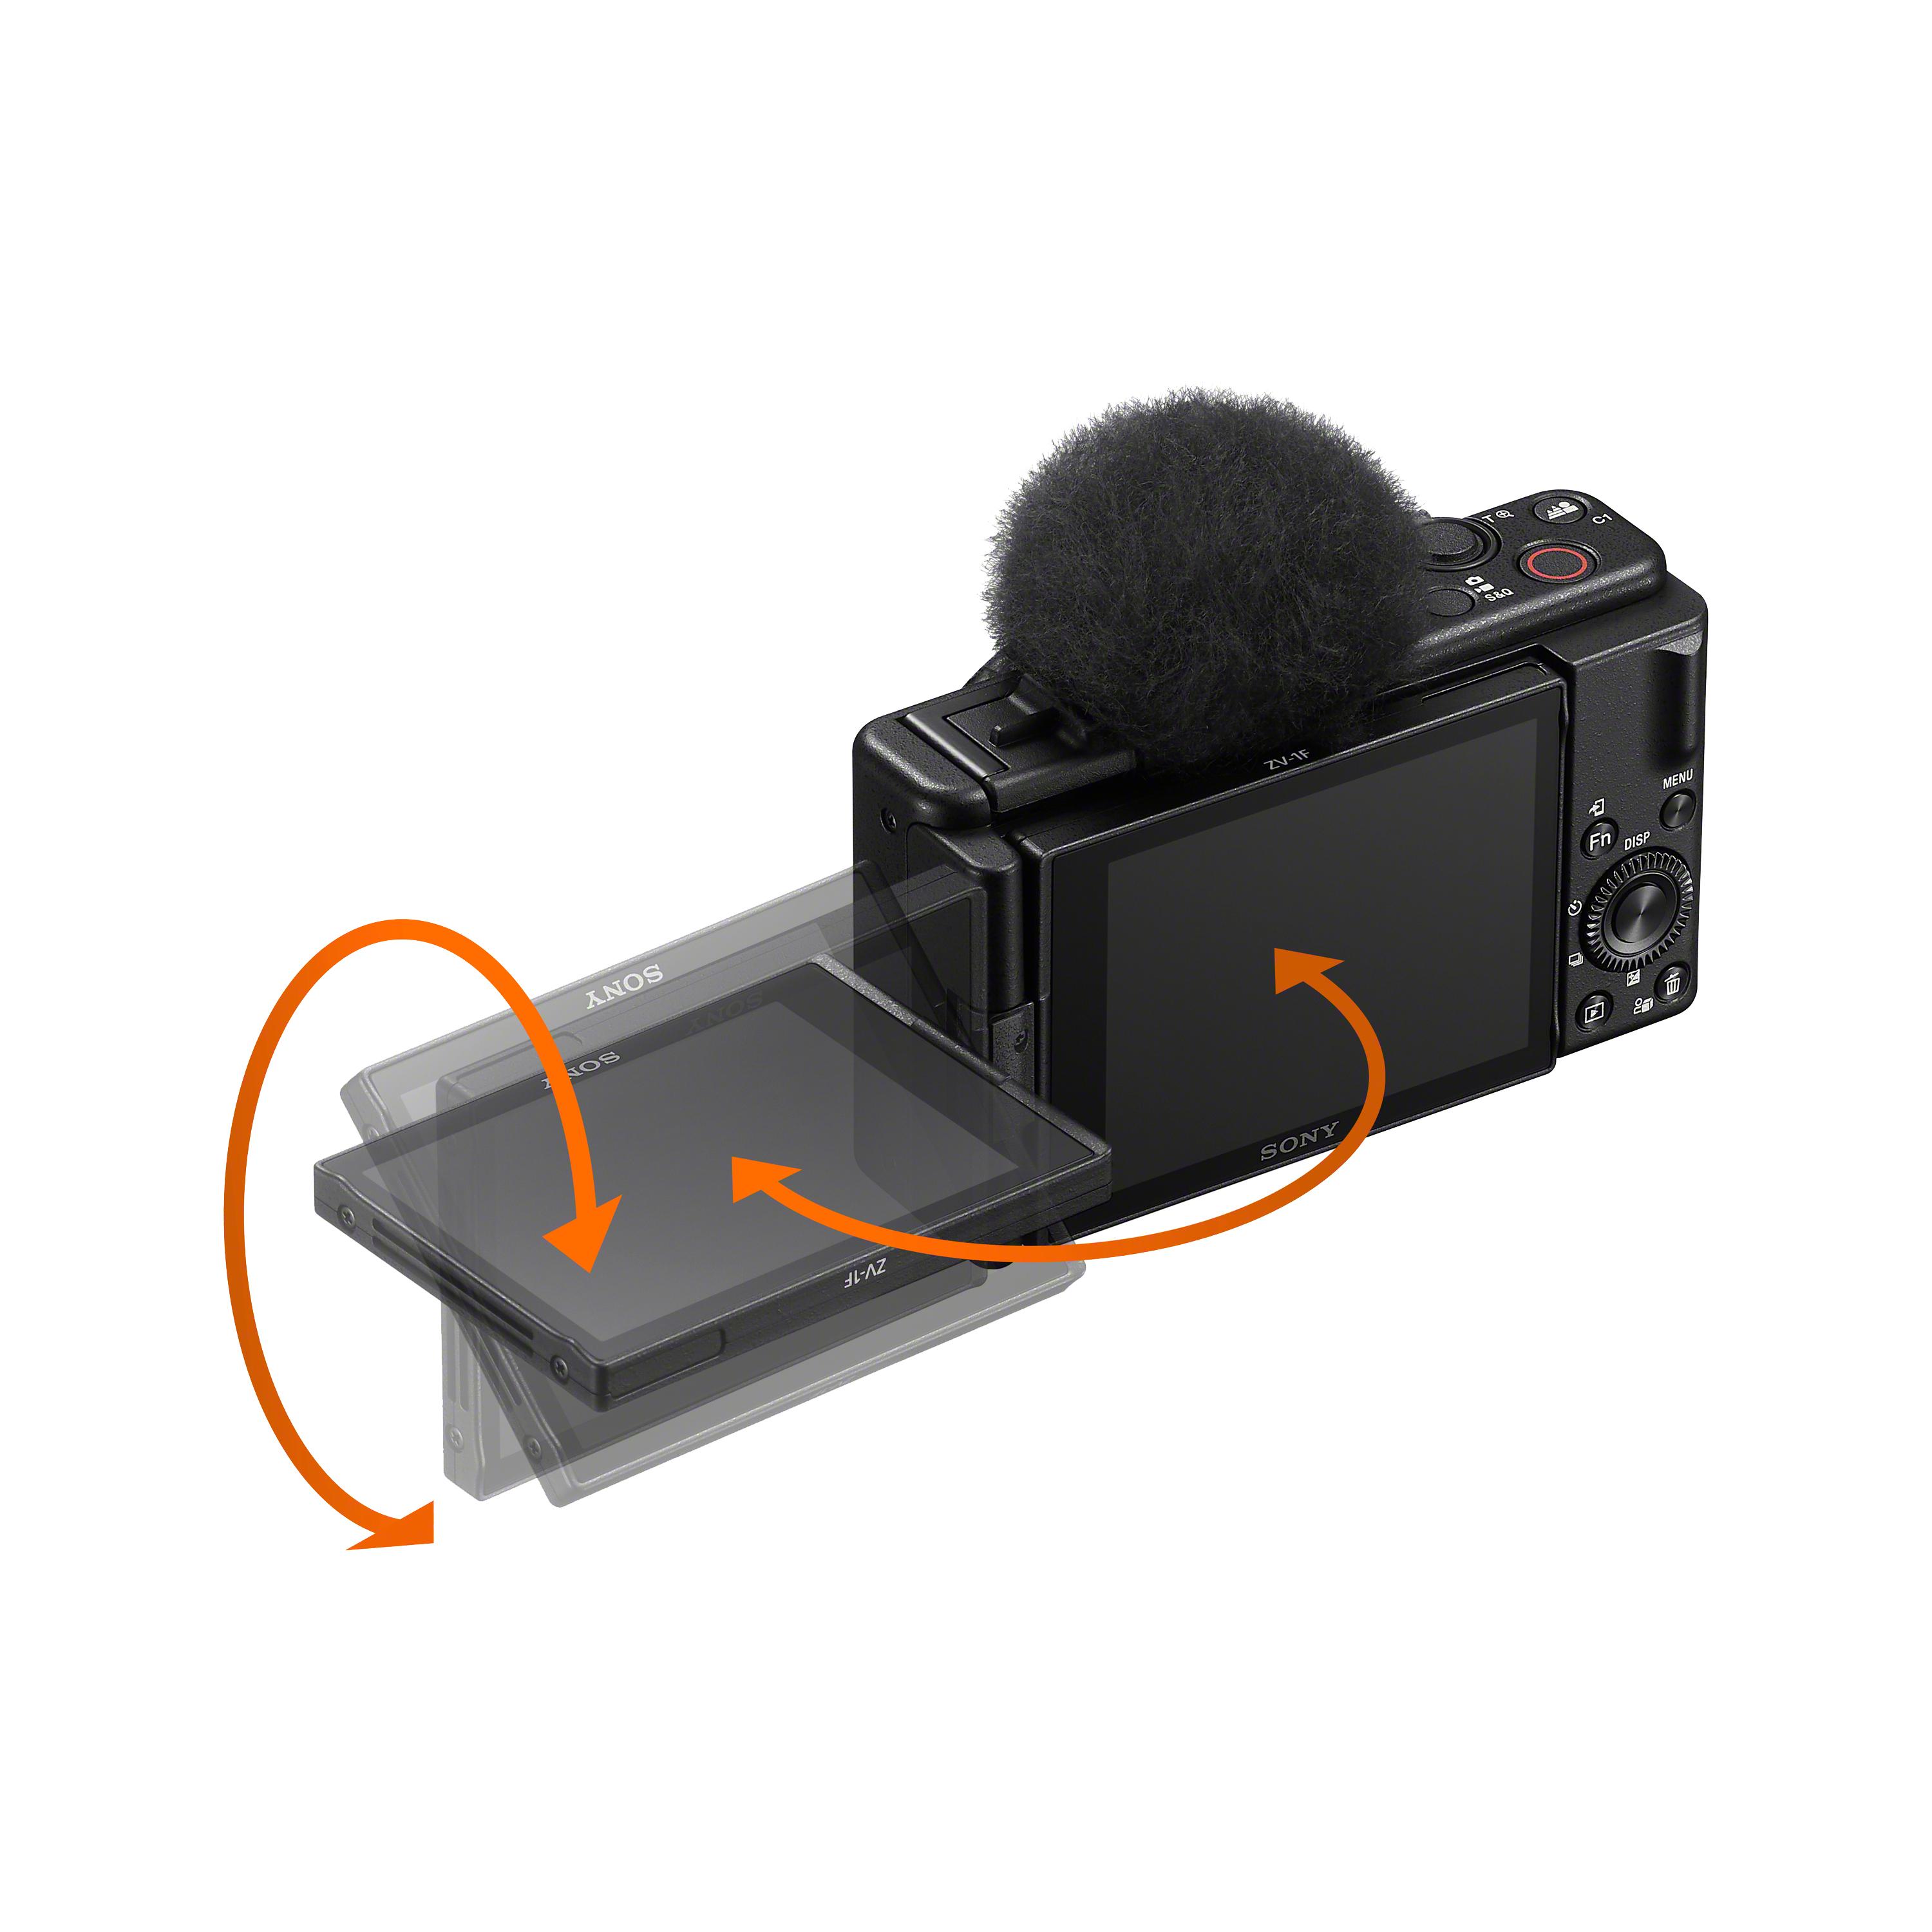 SONY Digital Camera ZV-1F 手持握把組合 黑/白色 公司貨 無卡分期